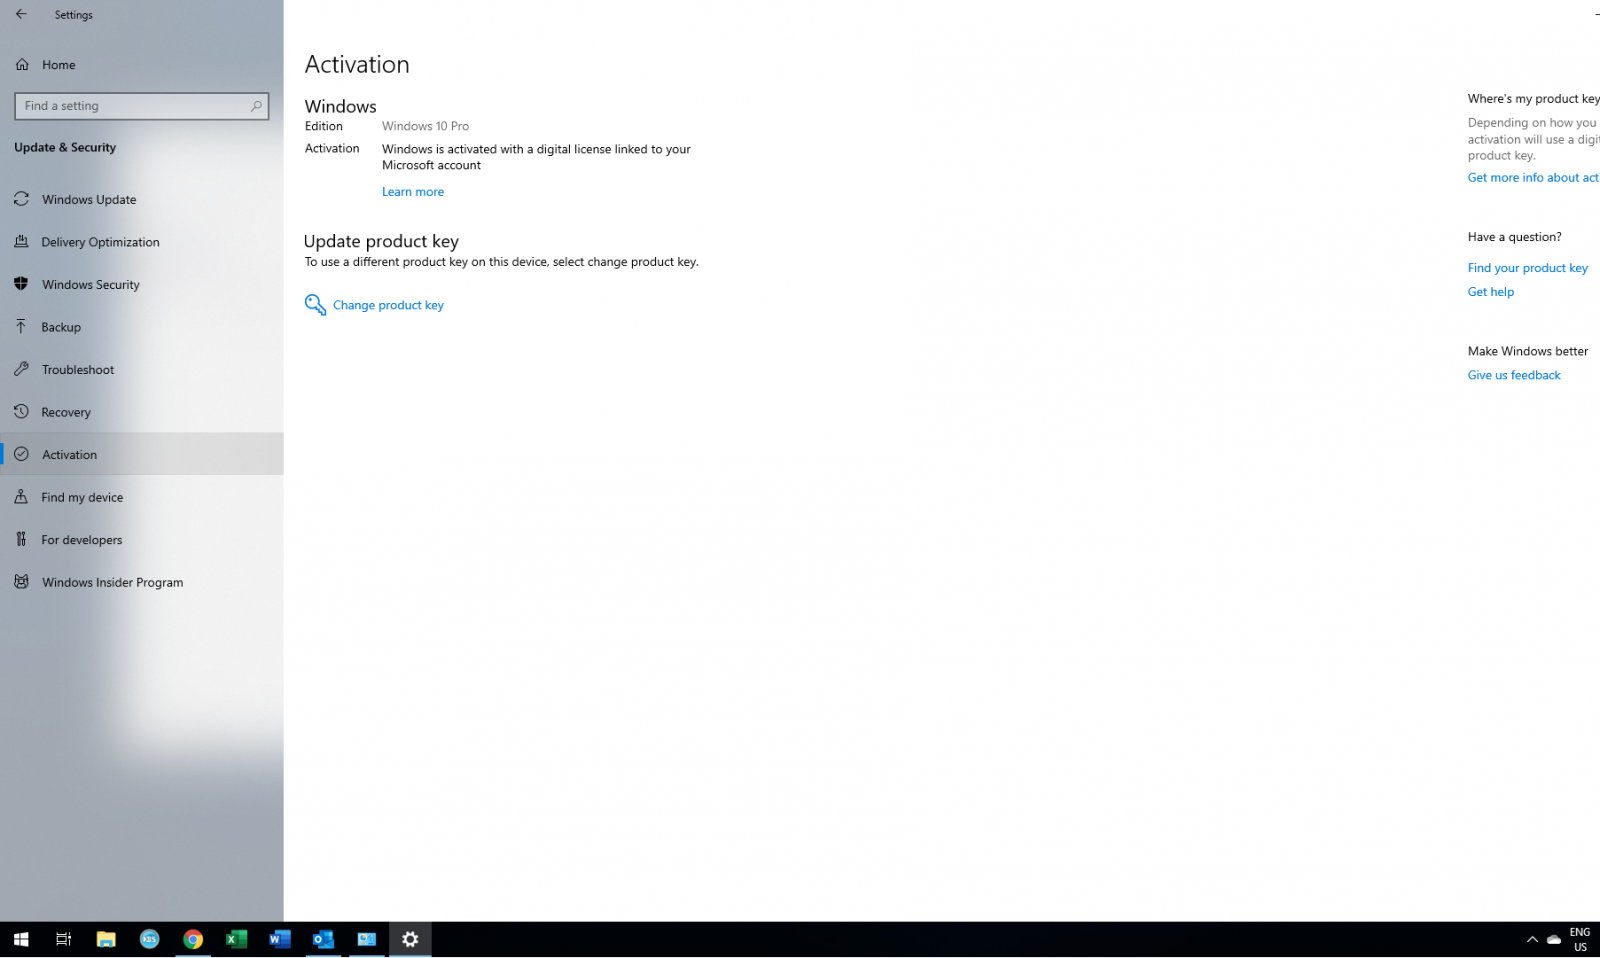 Microsoft Windows 10 Pro Oem